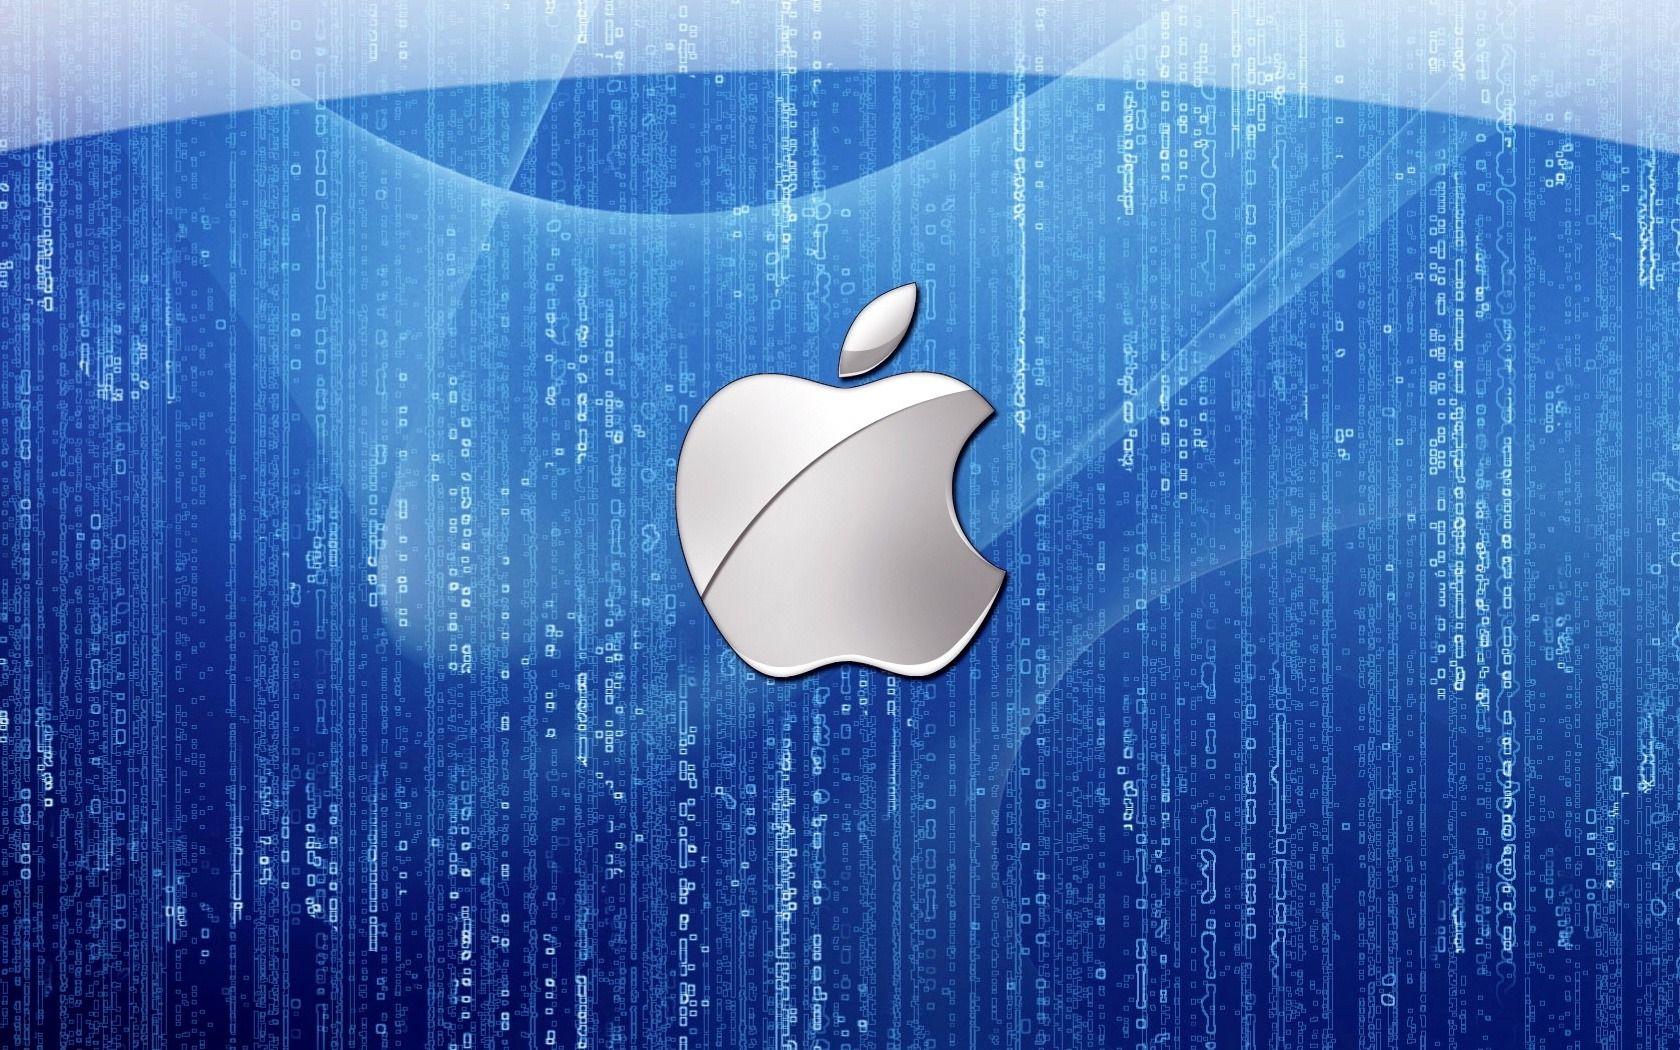 Blue Apple logo wallpaper. Blue Apple logo